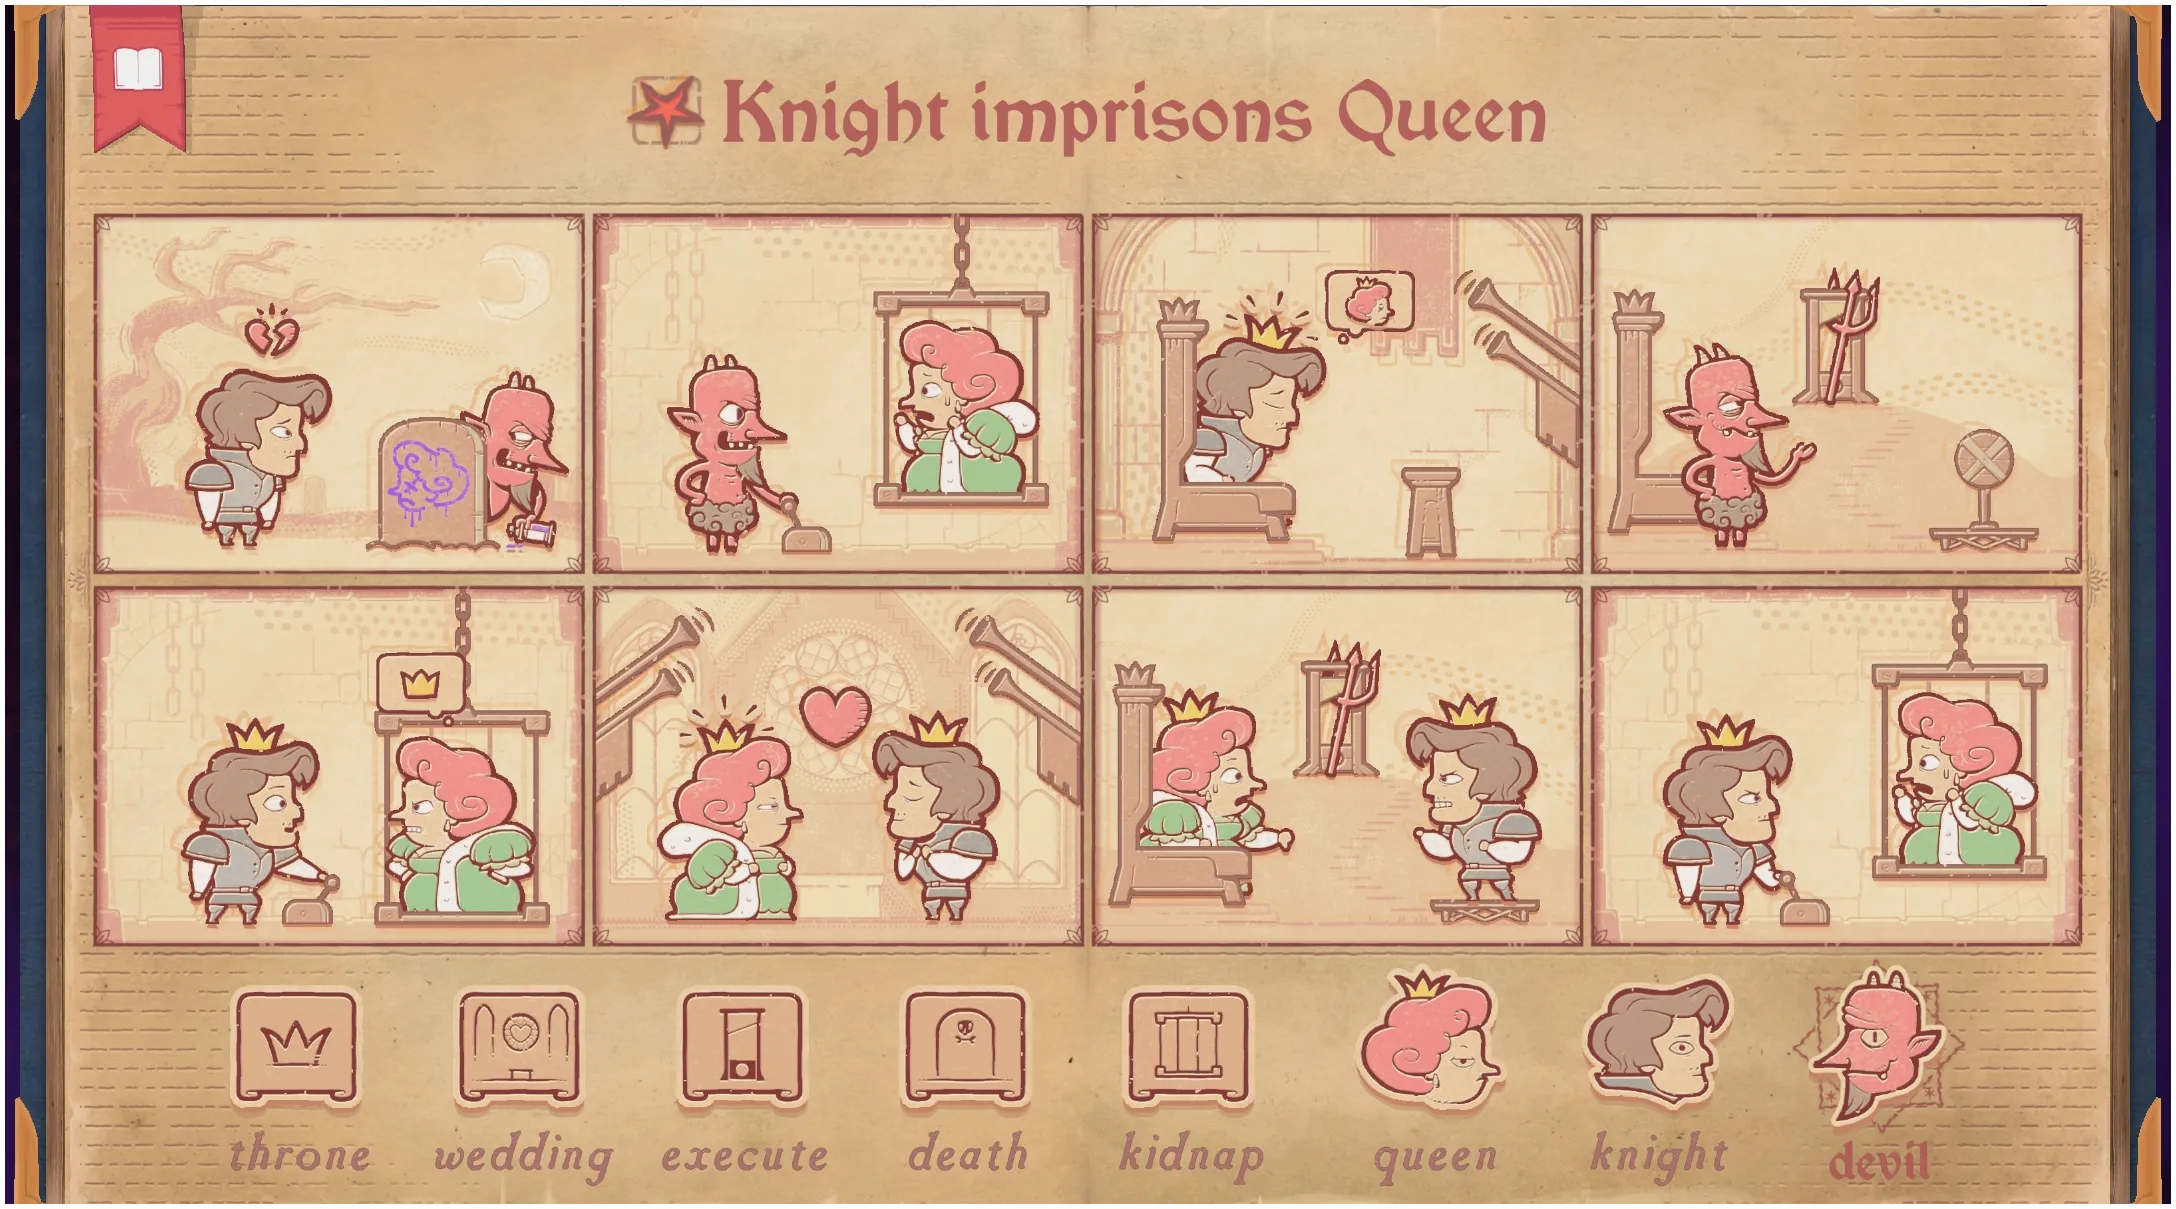 Storyteller_Knight Imprisons Queen